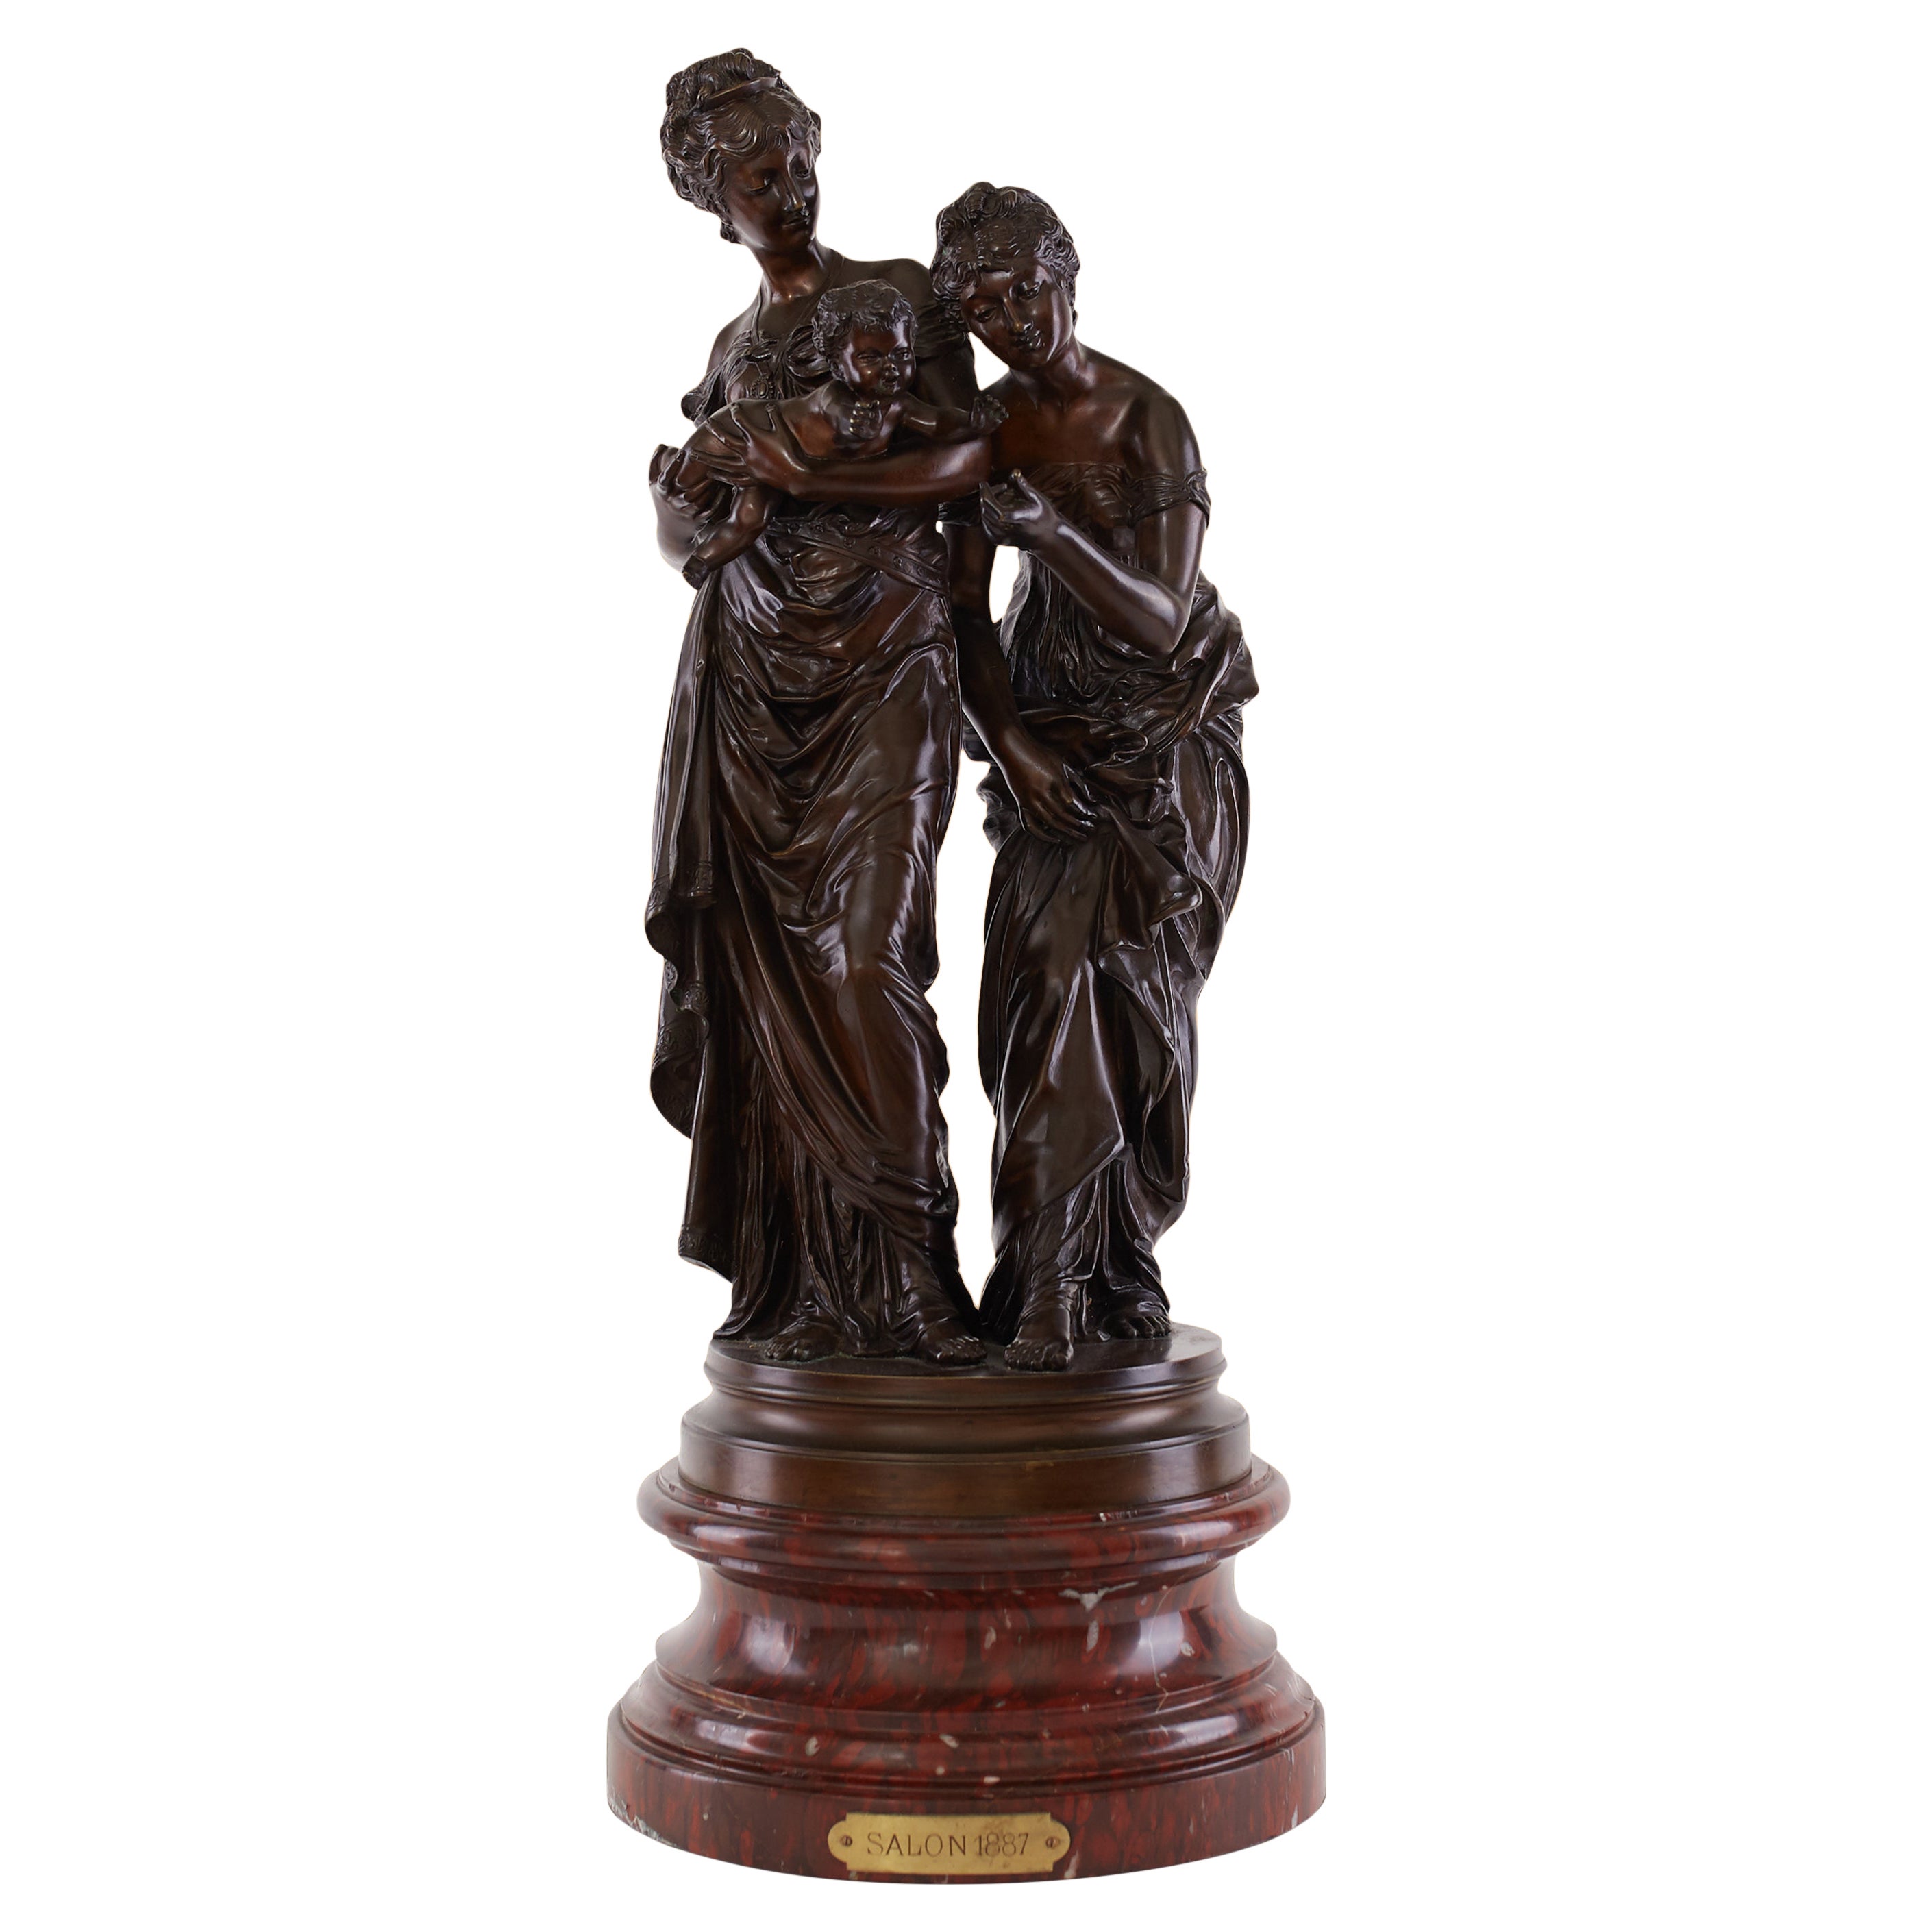 Bronze Sculpture circa 19th Century, 1887 by "Salon